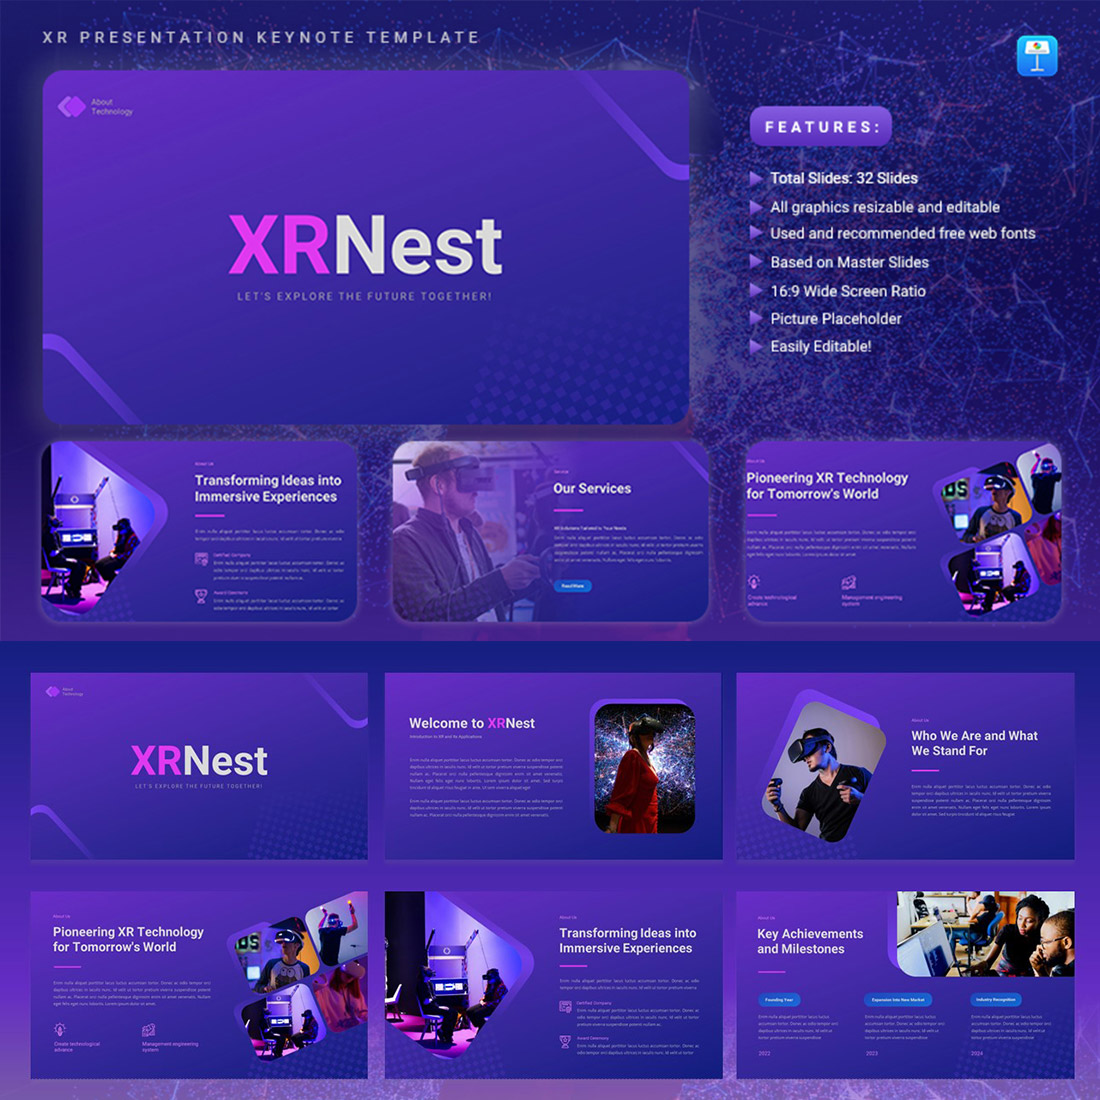 XRNest - XR Presentation Keynote Template preview image.